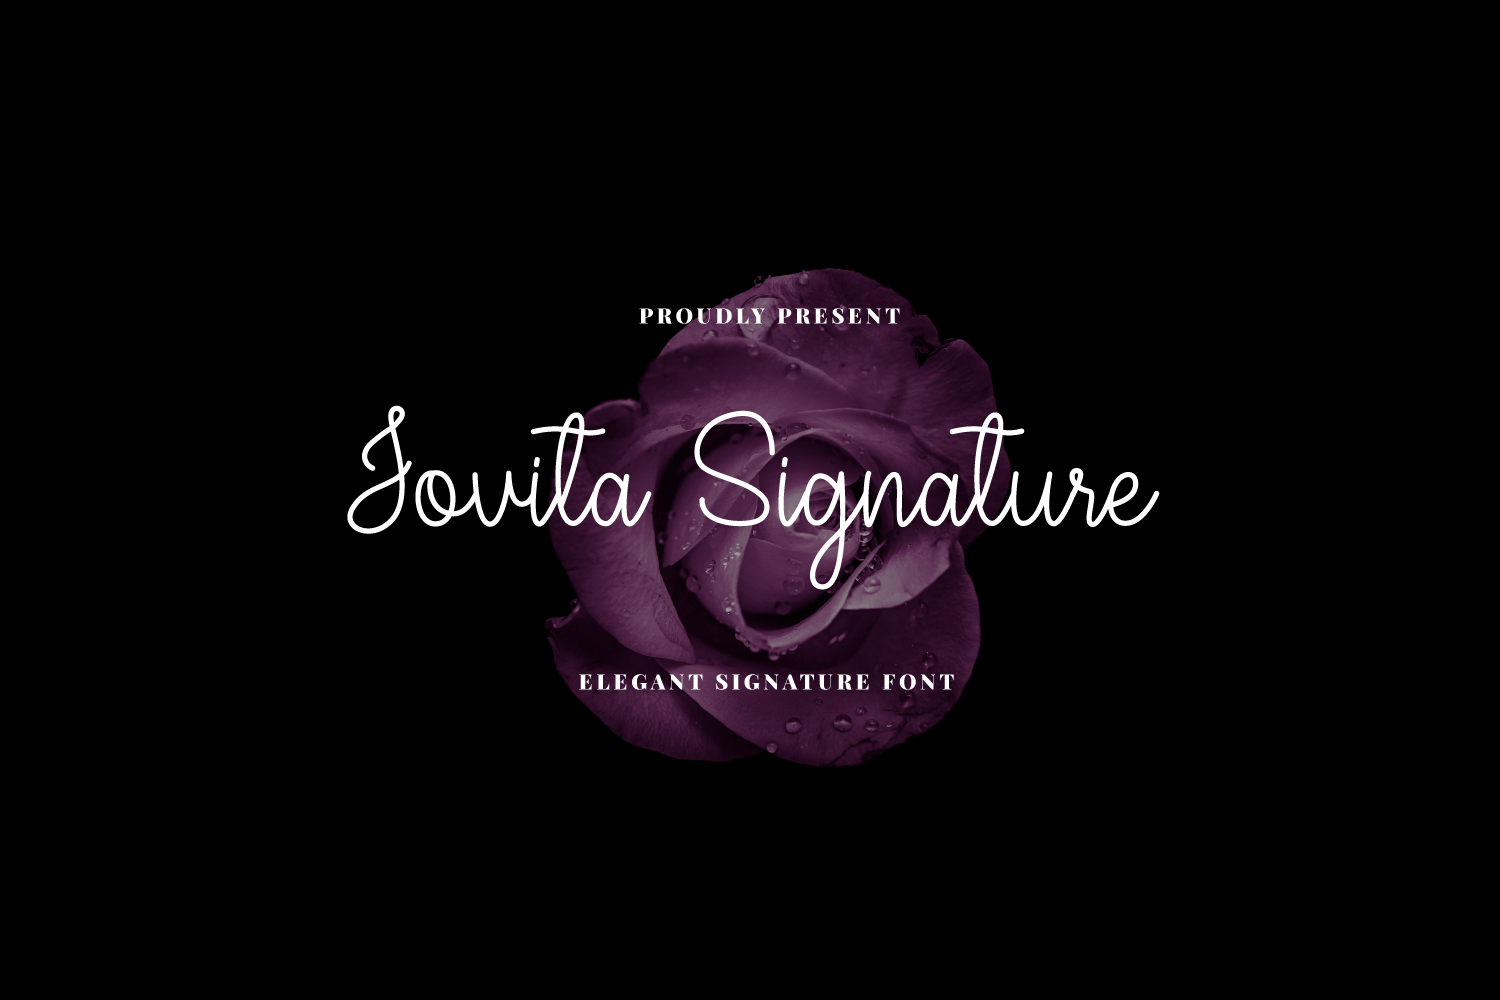 Jovita Signature Free Font